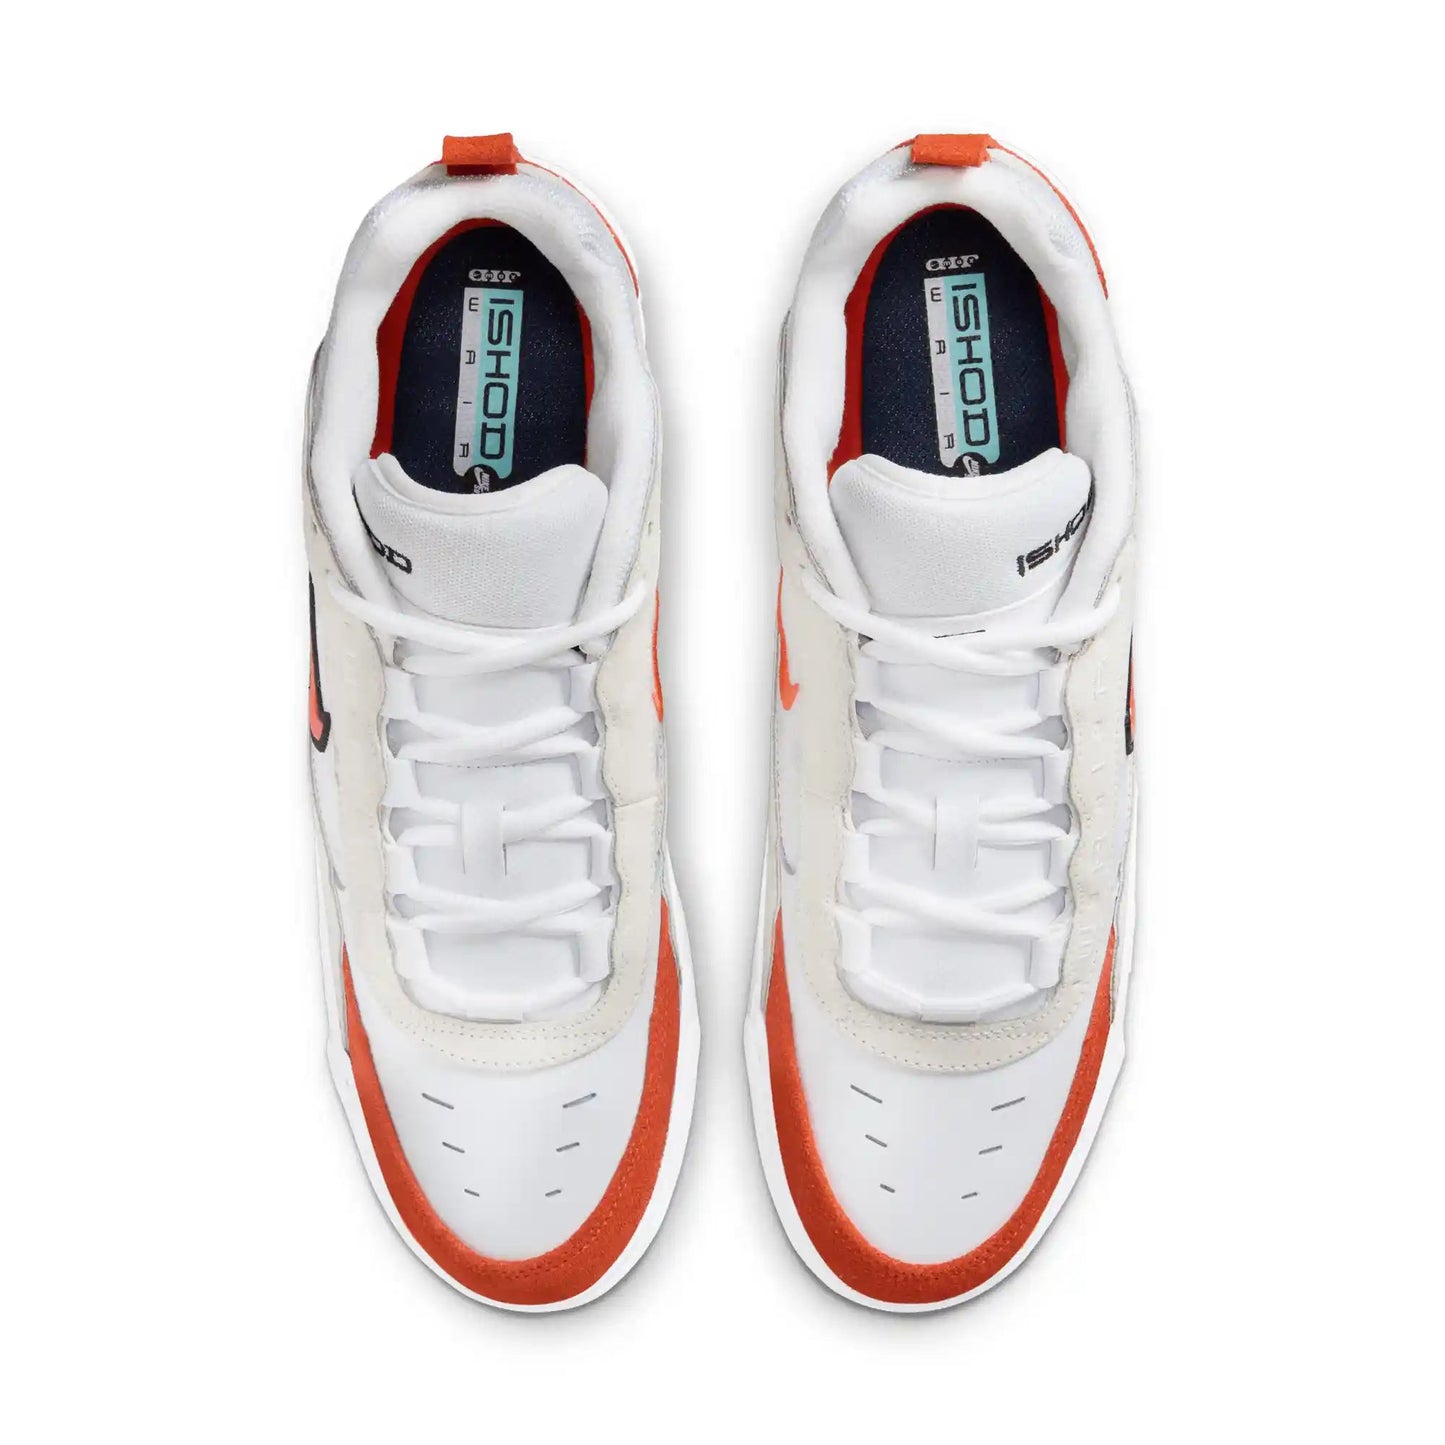 Nike SB Air Max Ishod, white/orange-summit white-black - Tiki Room Skateboards - 3